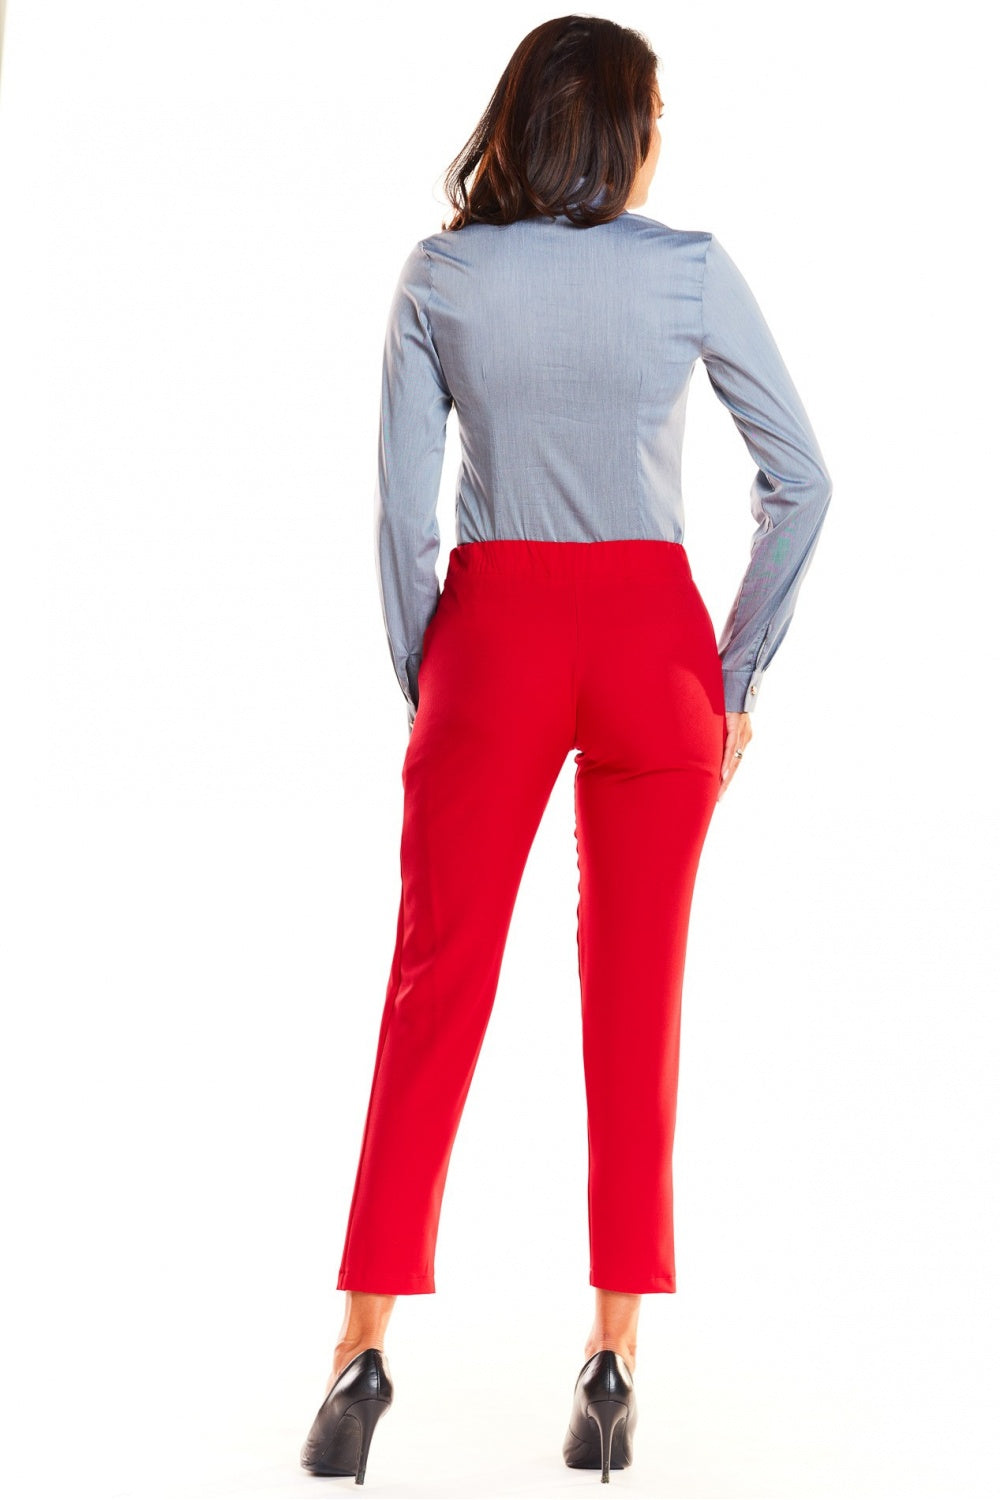 Women trousers model 139985 awama